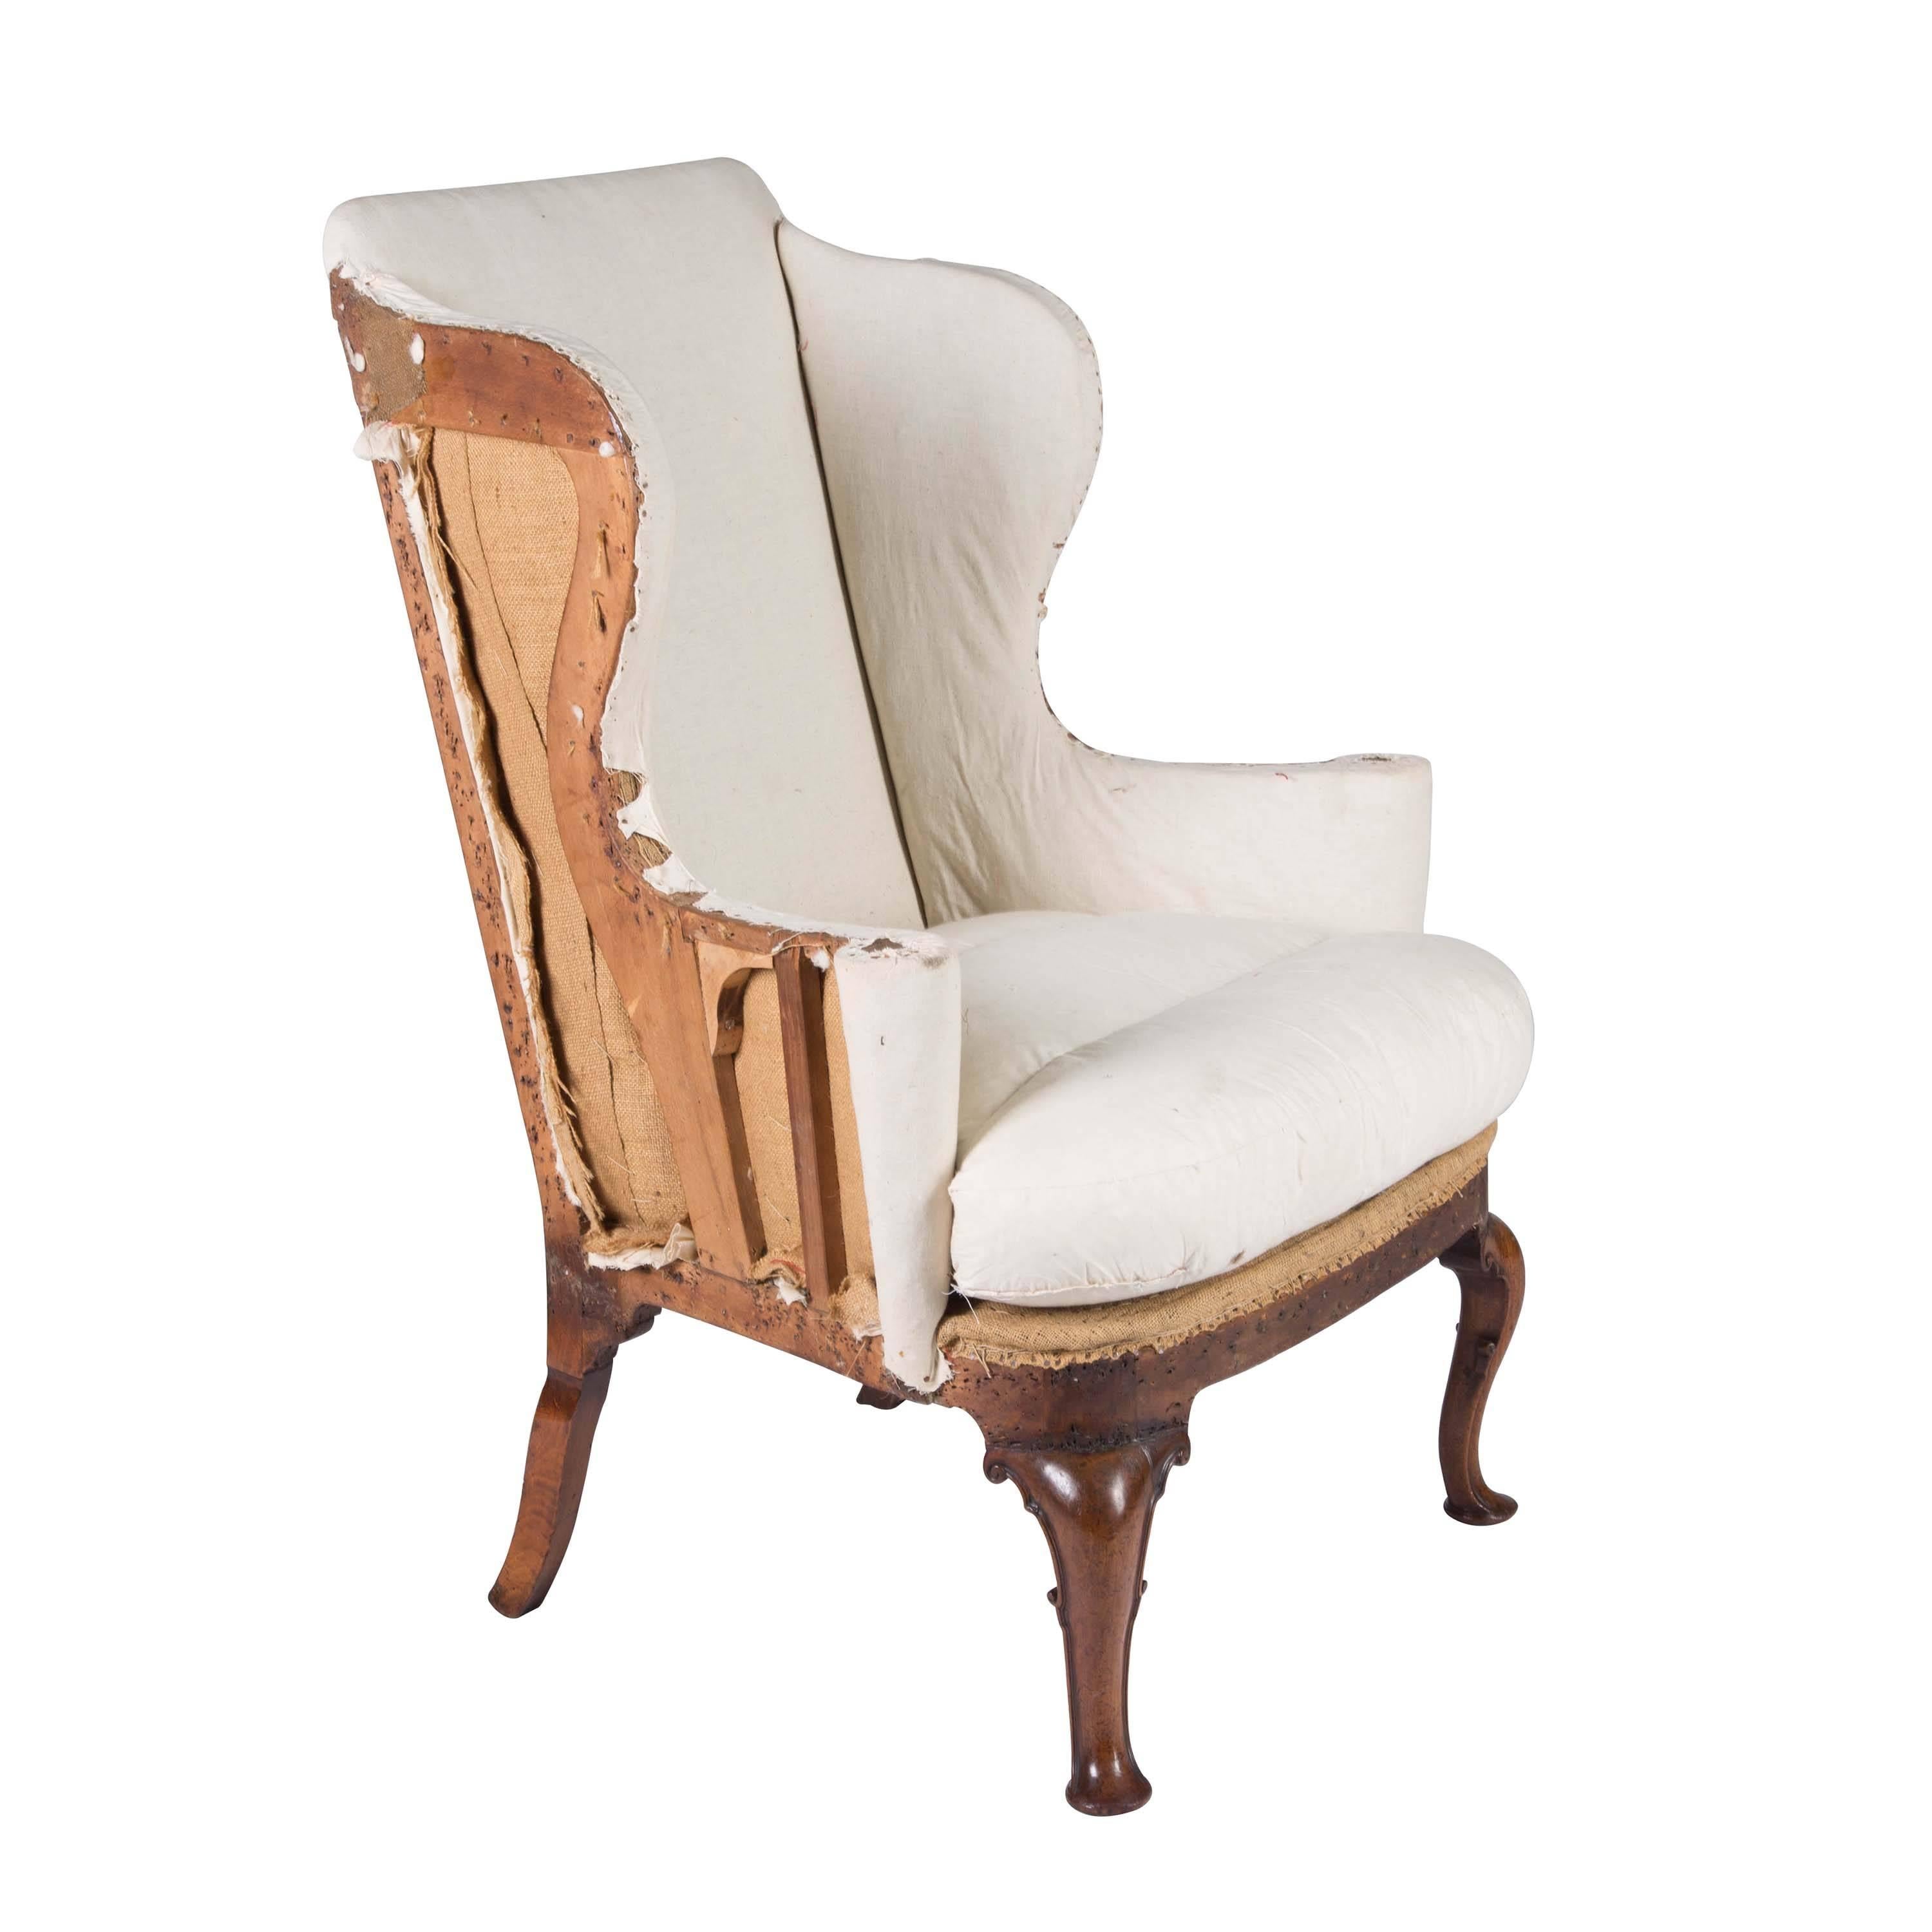 Queen Anne period walnut wingback chair, circa 1710.